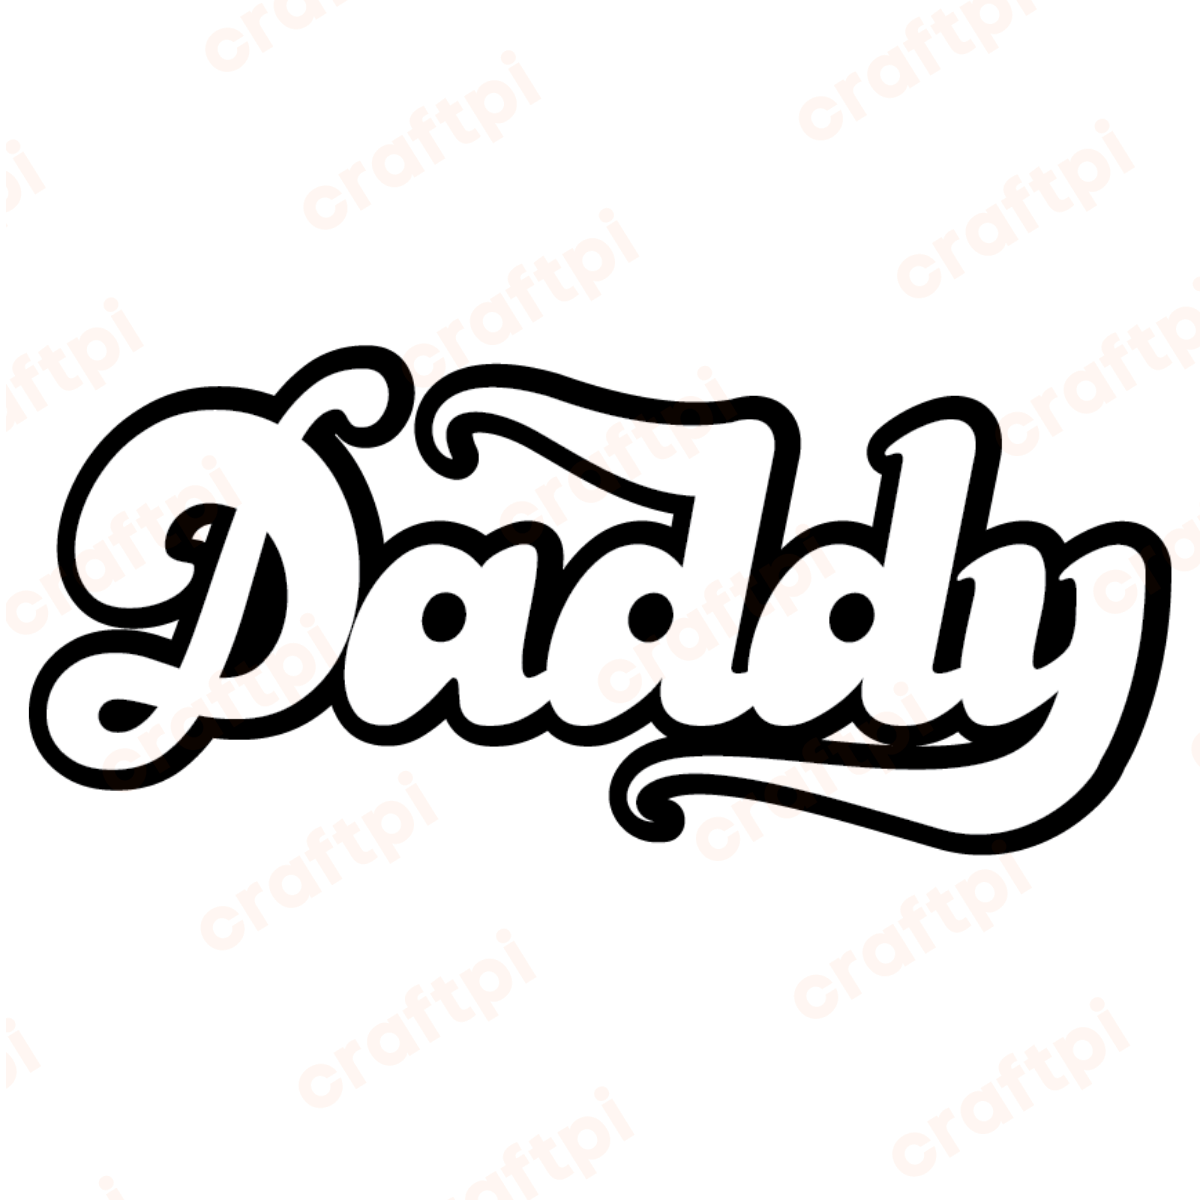 daddy 1